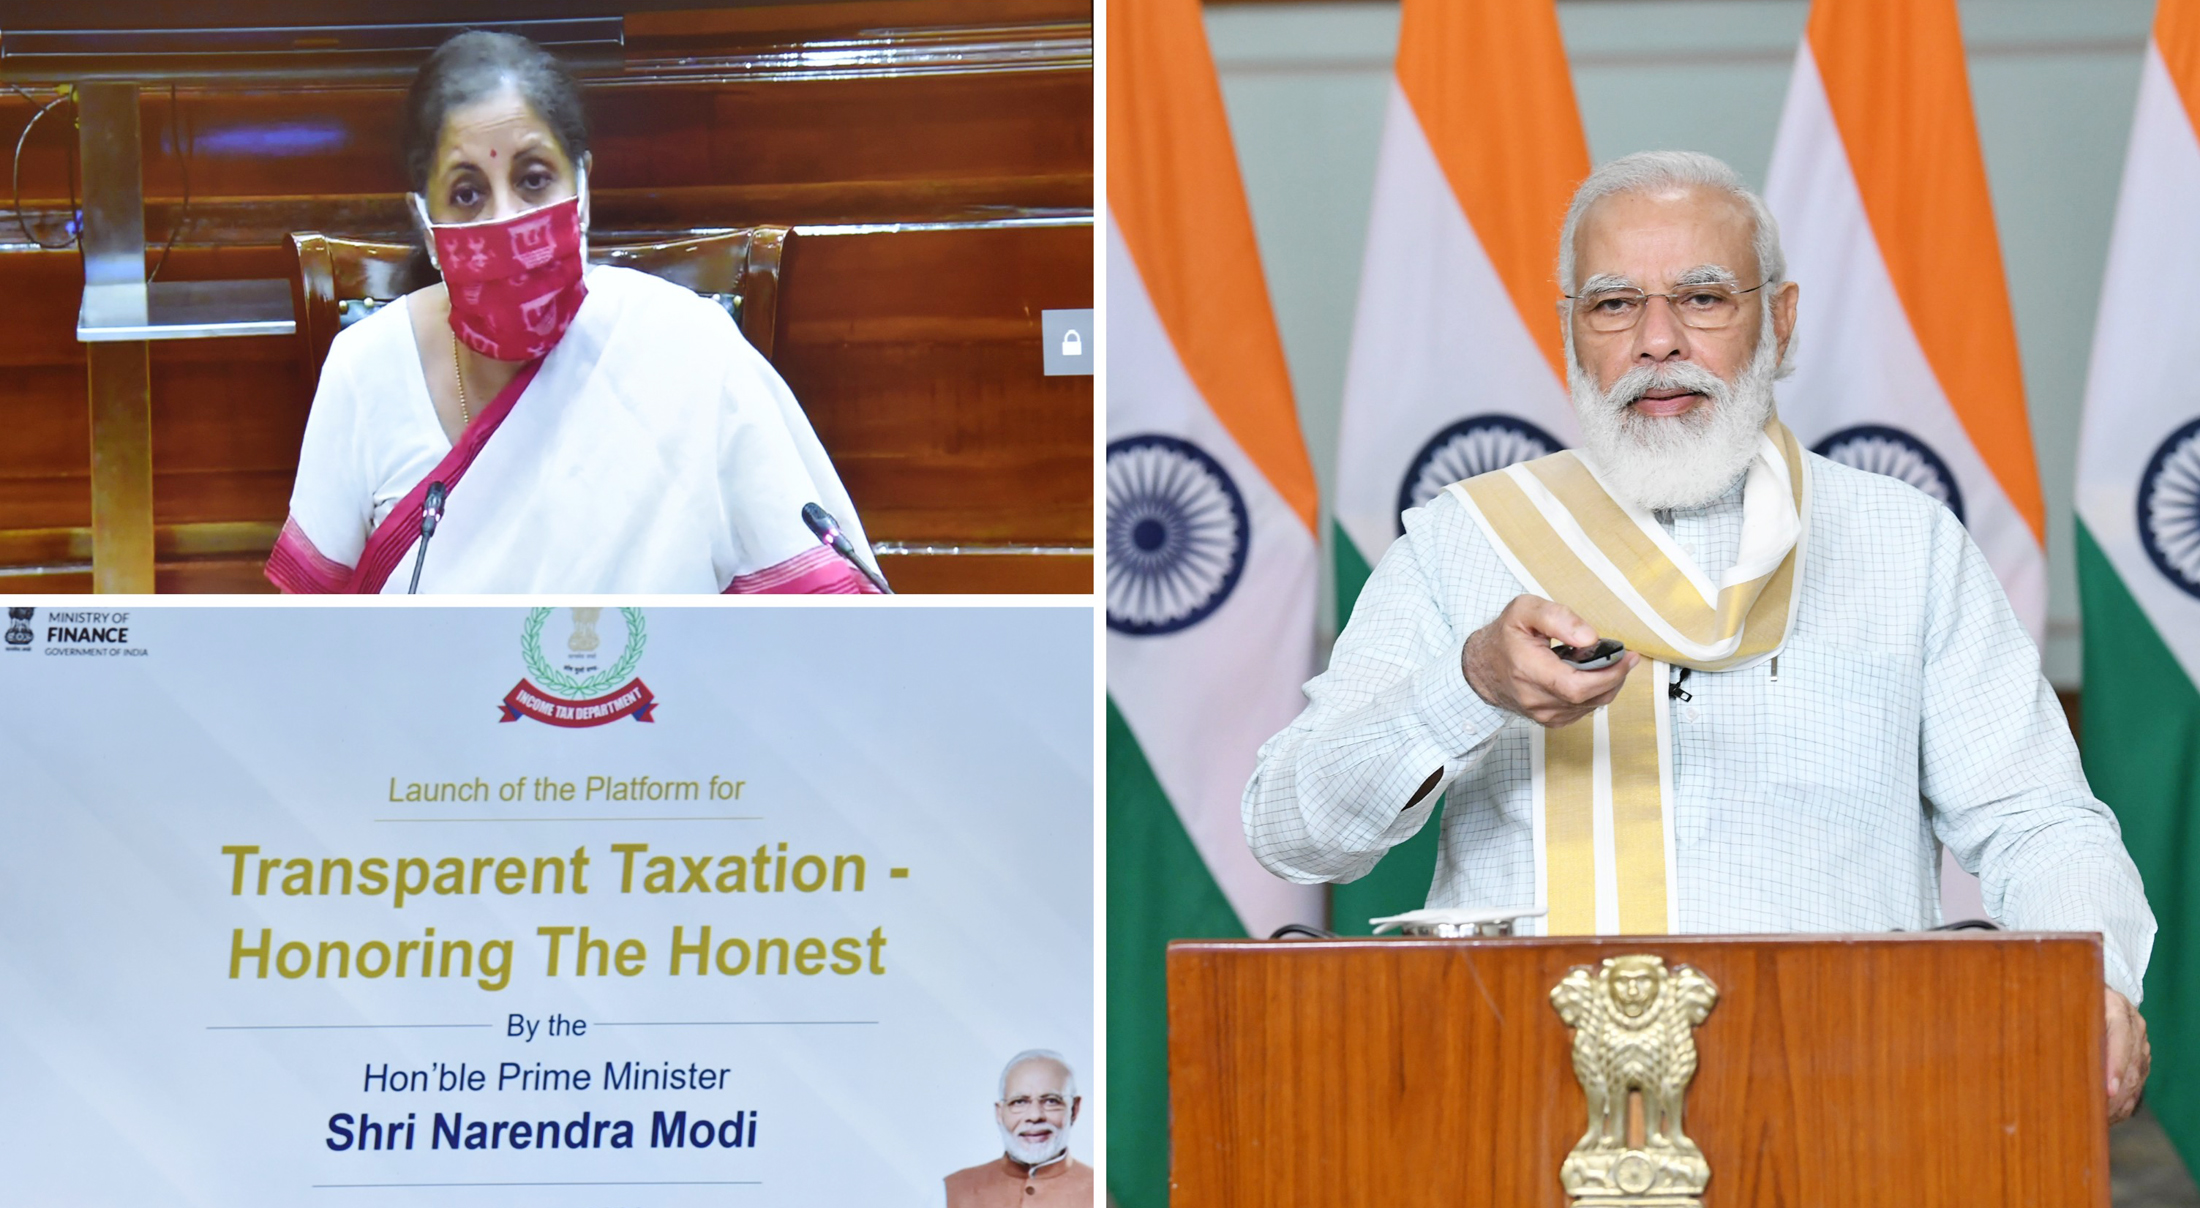 Prime Minister Narendra Modi launches platform for “Transparent Taxation - Honouring the Honest”